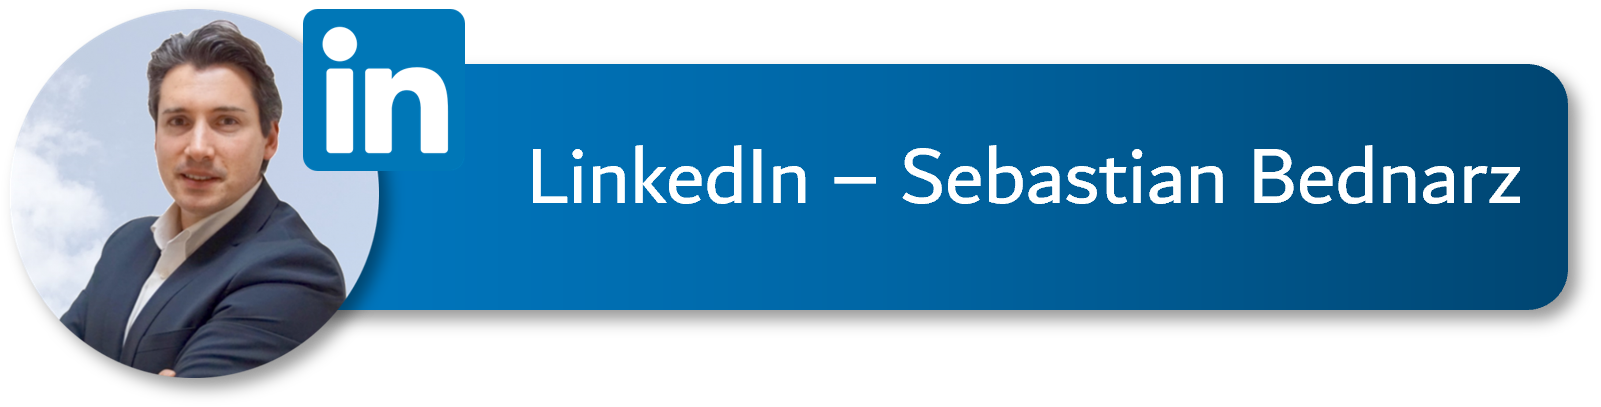 Button LinkedIn - Sebastian Bednarz